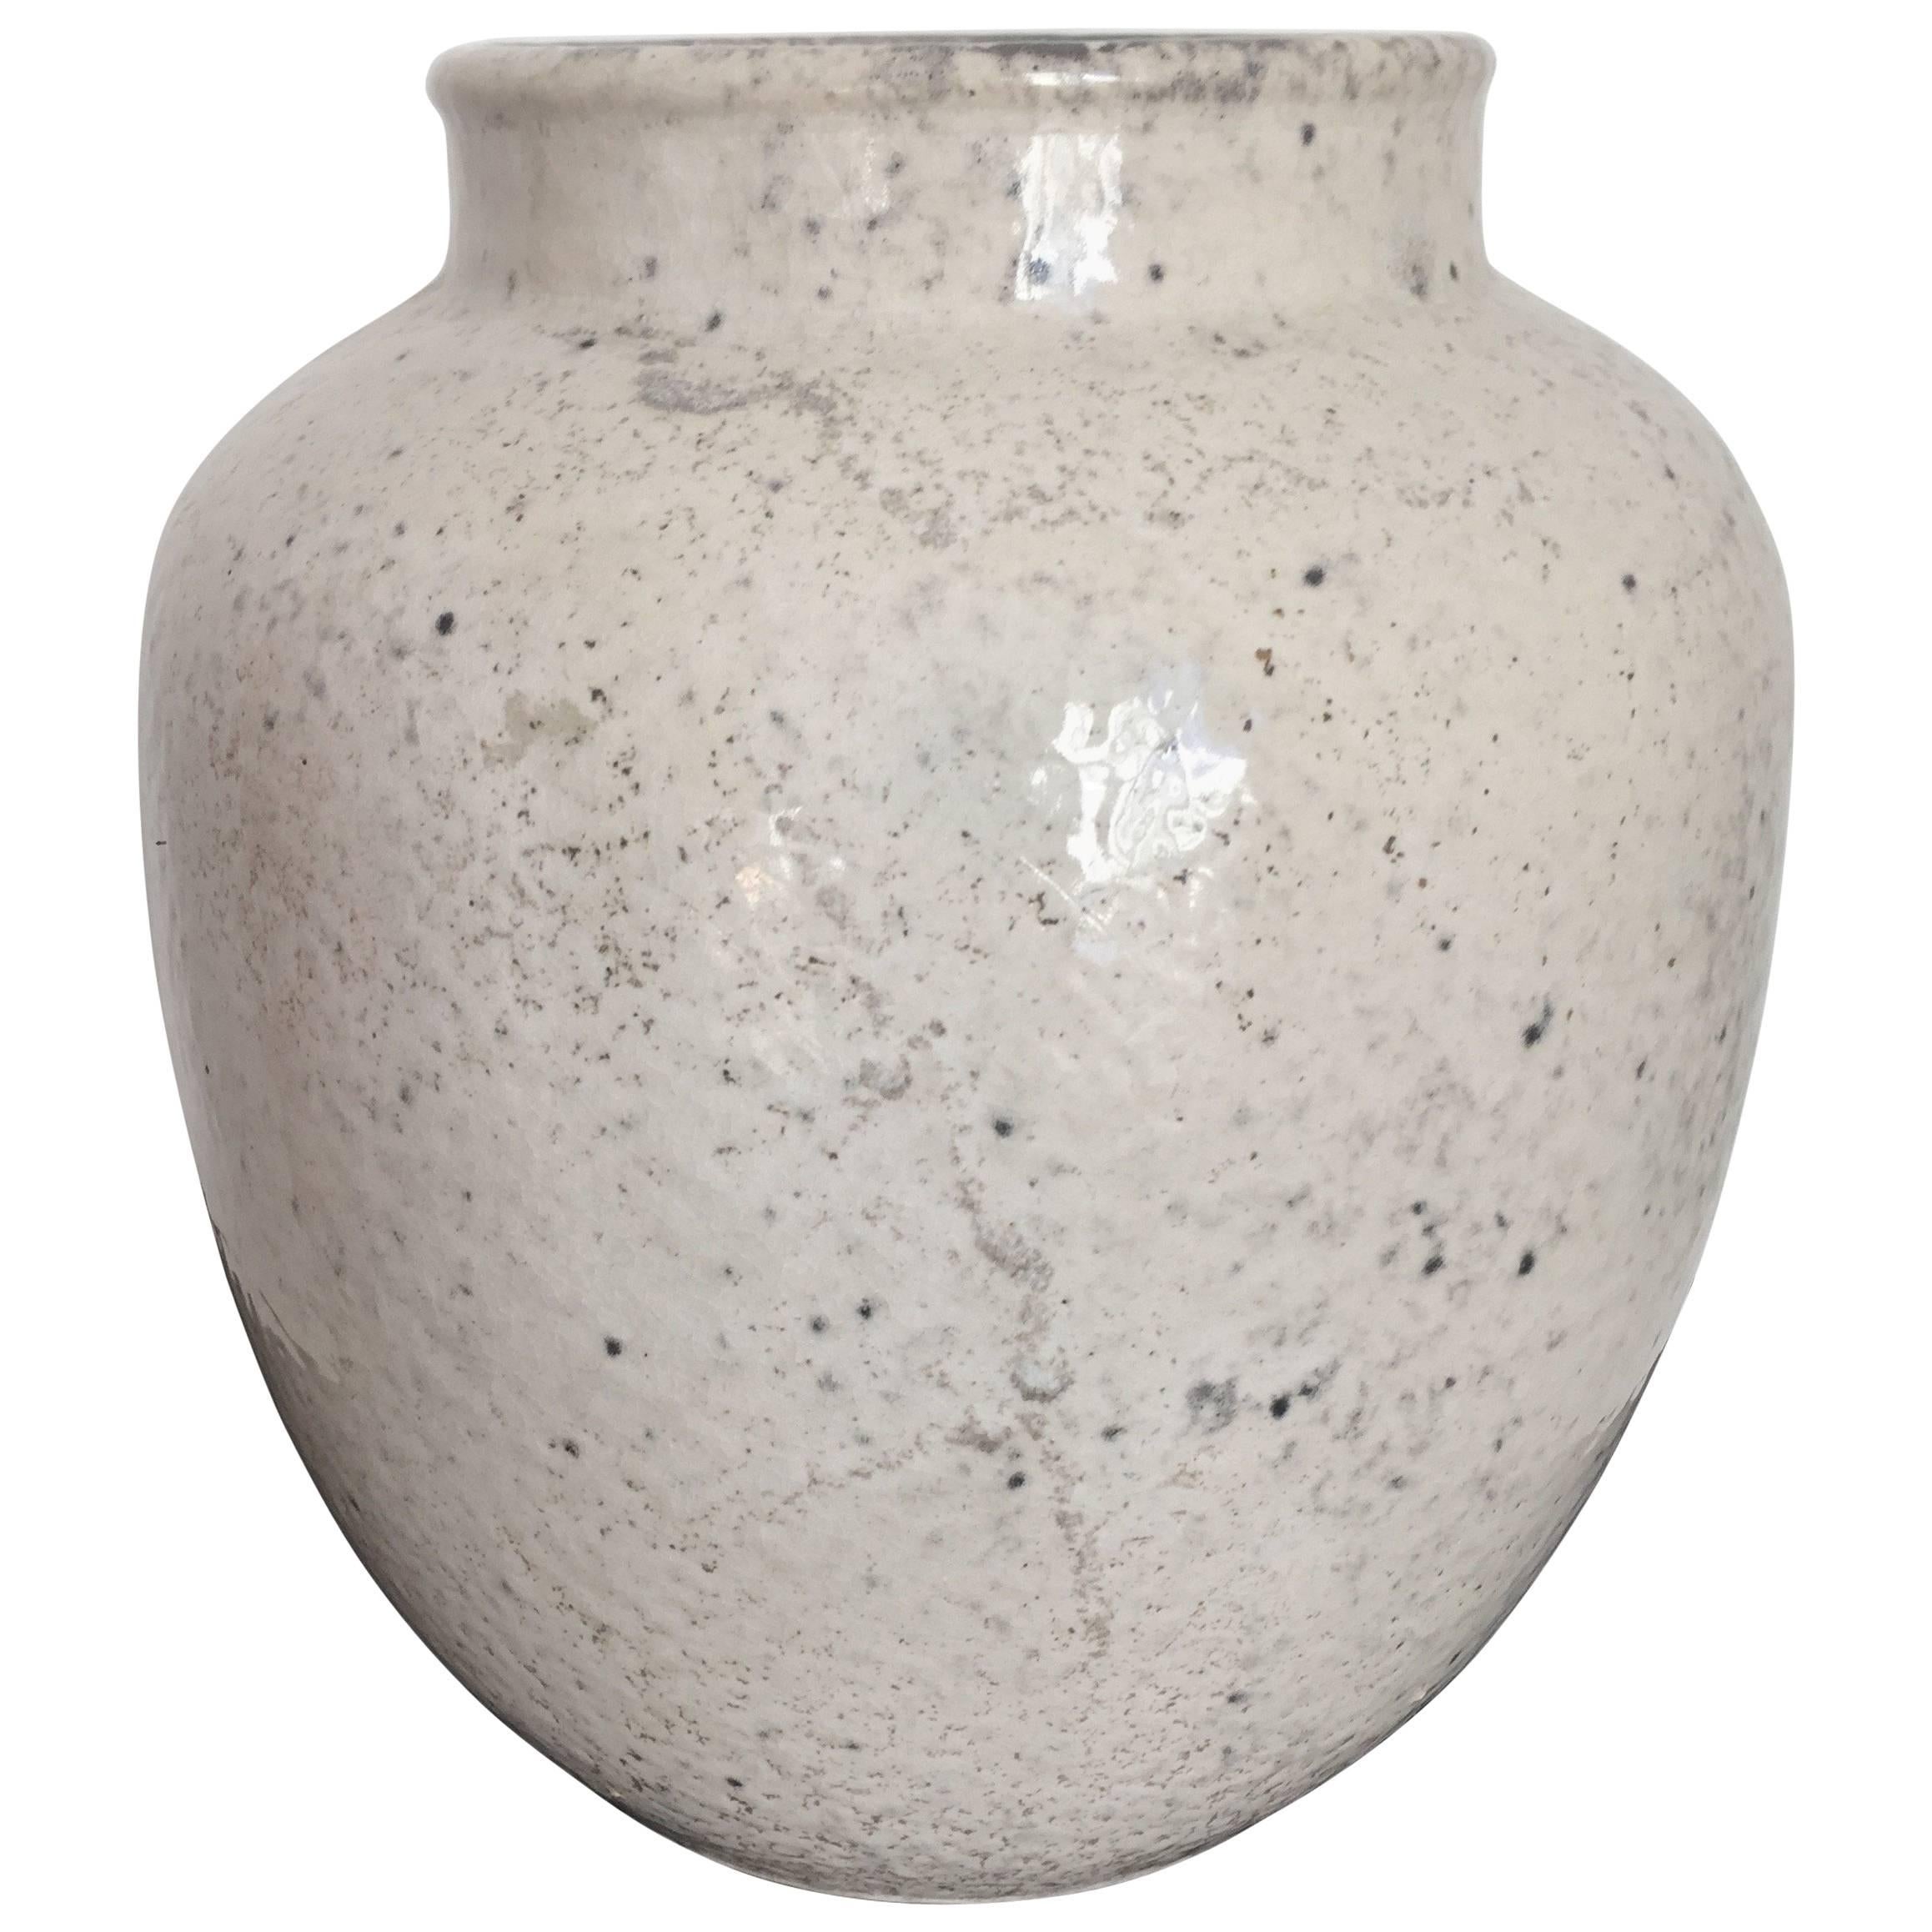 Ceramic Vase by Richard Uhlemeyer in Off-White with Grey Shades